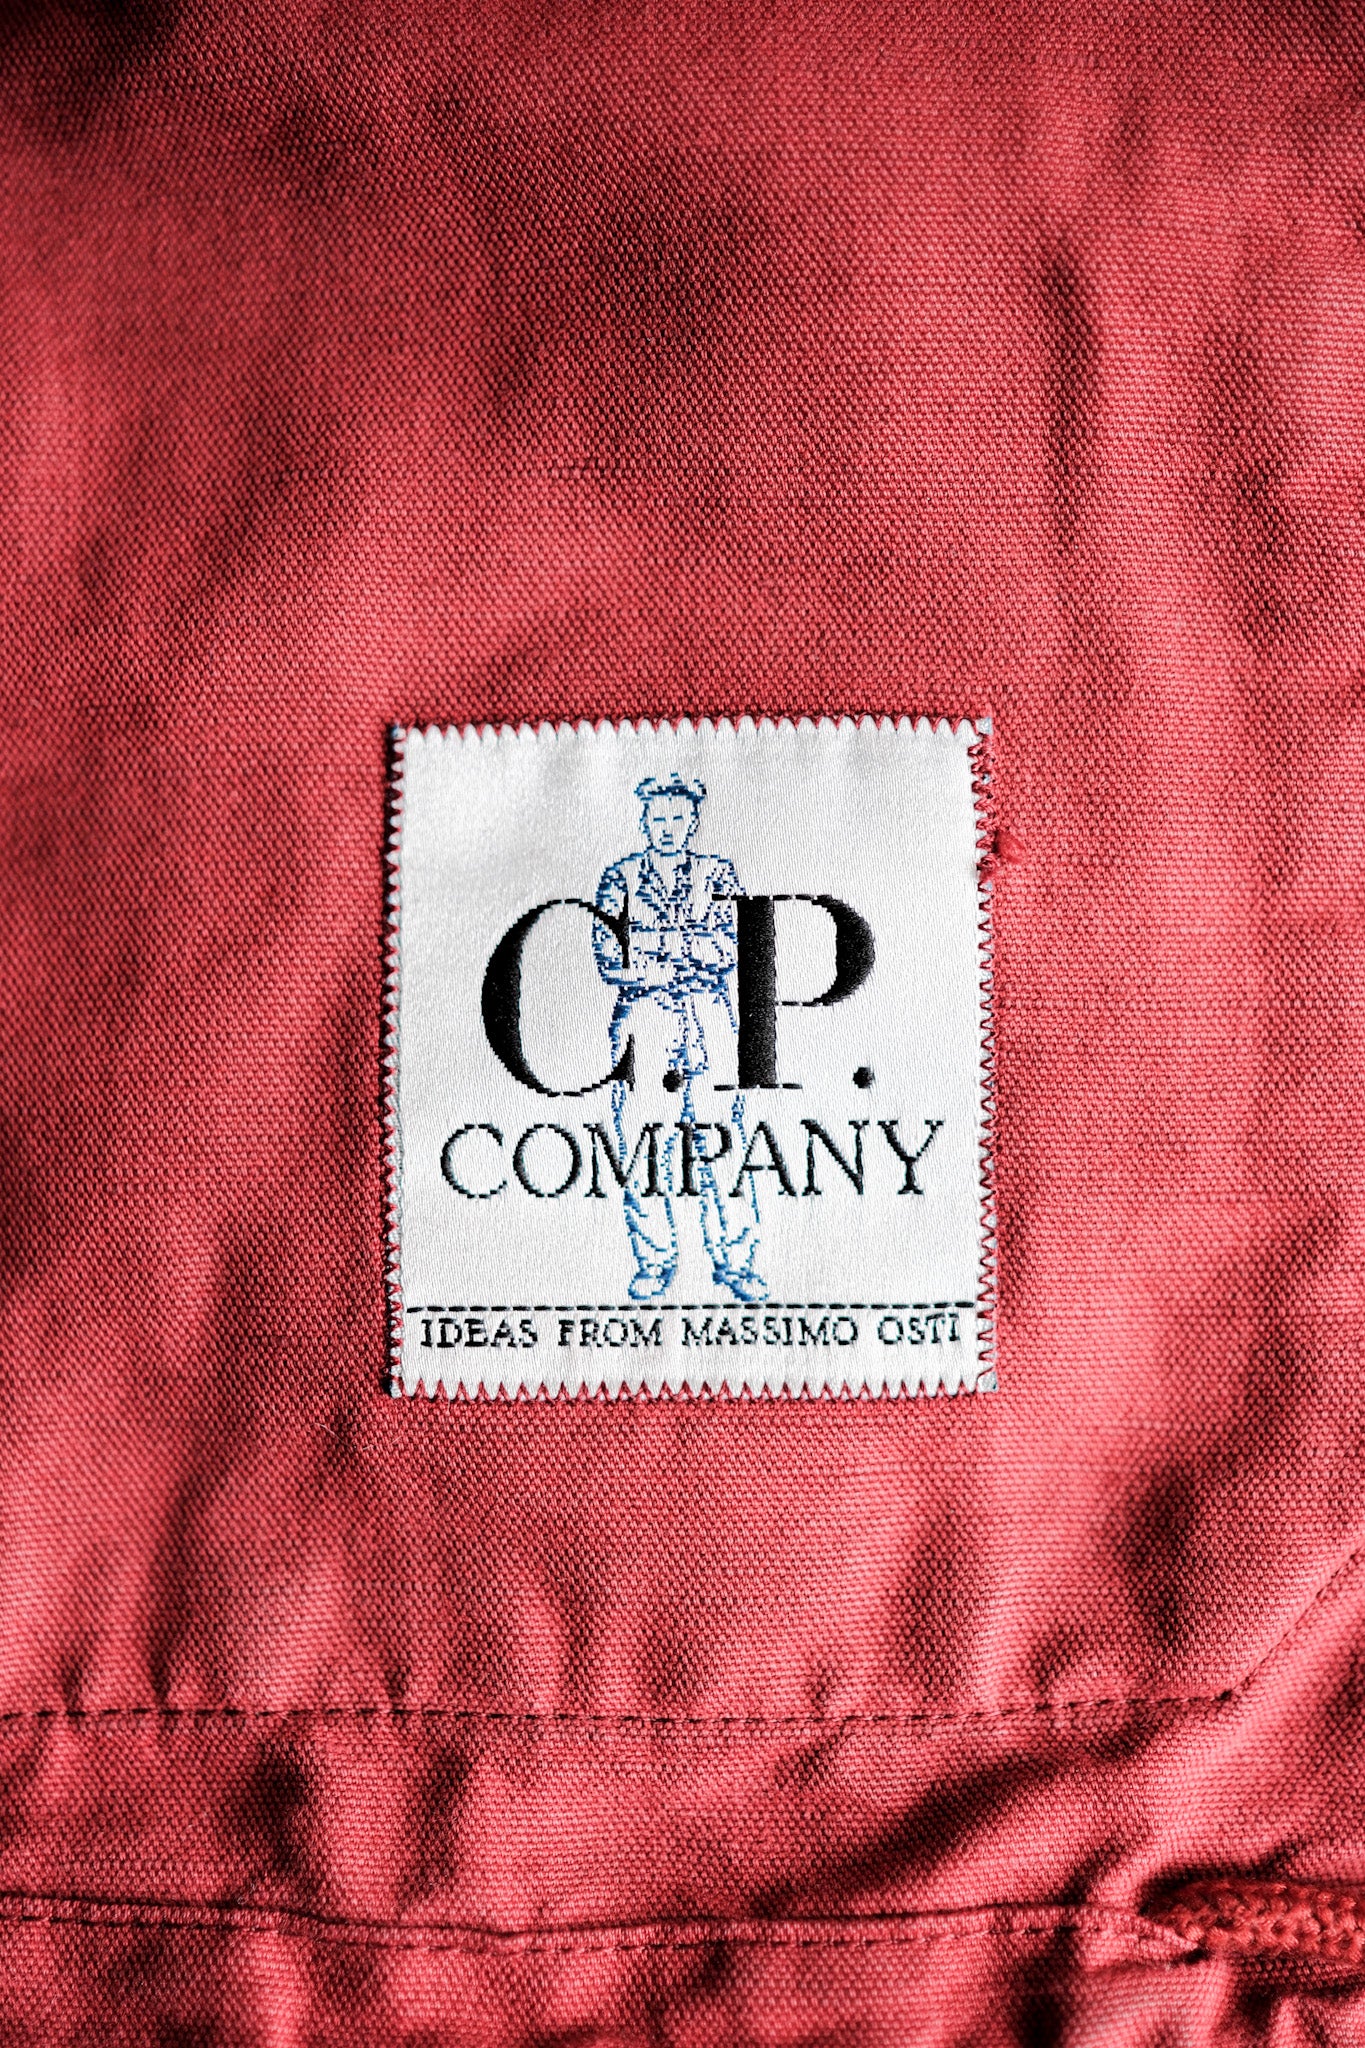 [~ 80's] Old C.P.COMPANANY เสื้อผ้าย้อมผ้าลินินผ้าฝ้ายขนาดใหญ่ 48